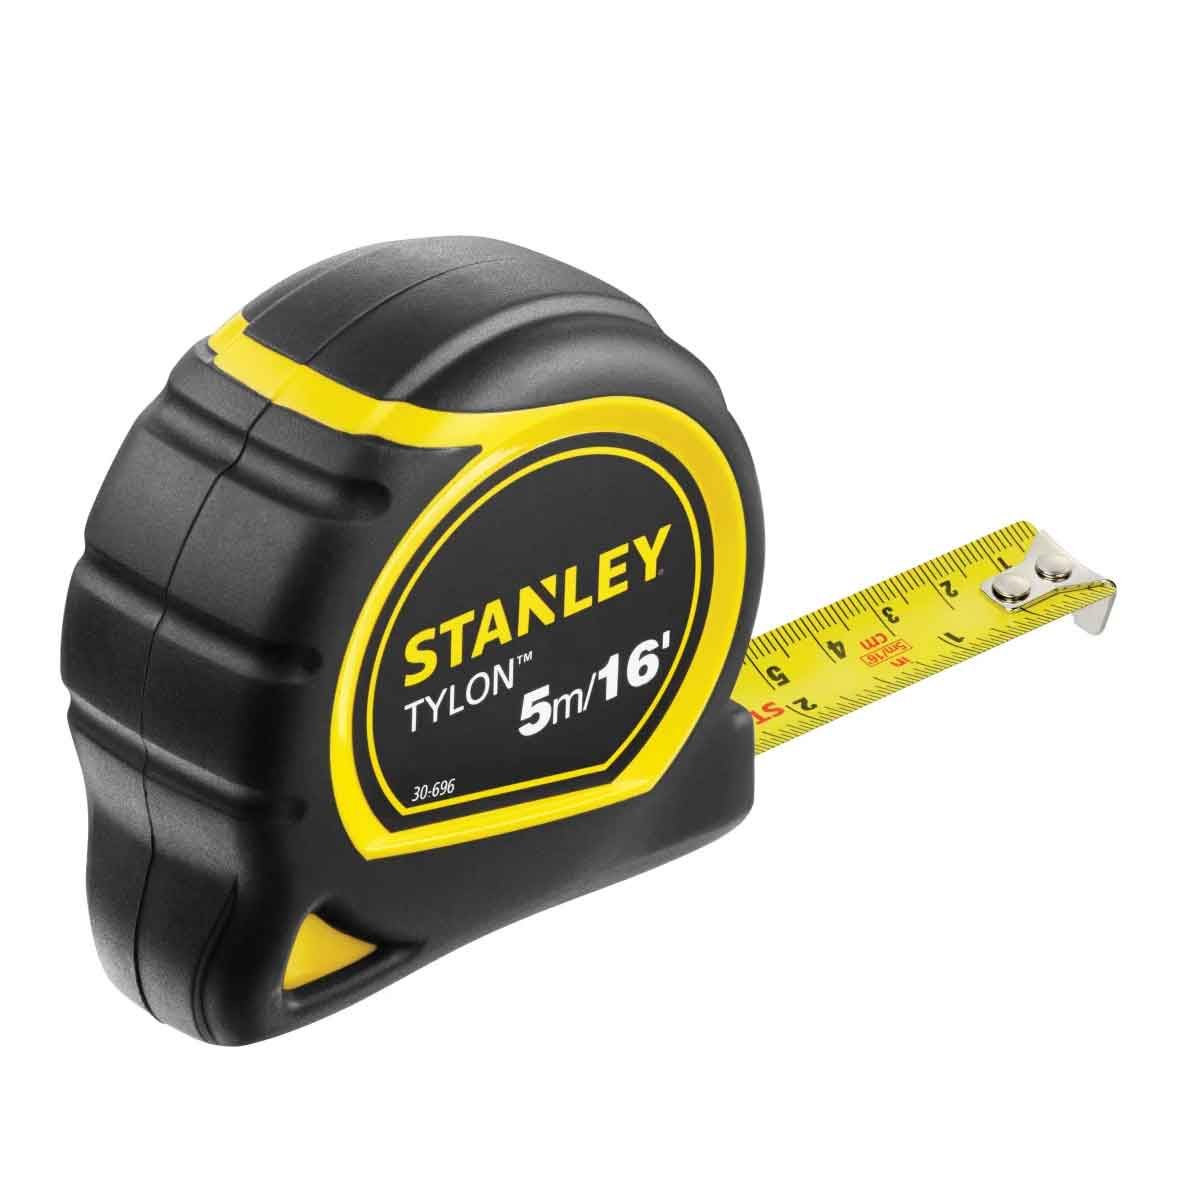 Stanley STA030696N Tylon Pocket Tape Measure 5m/16ft Width 19mm